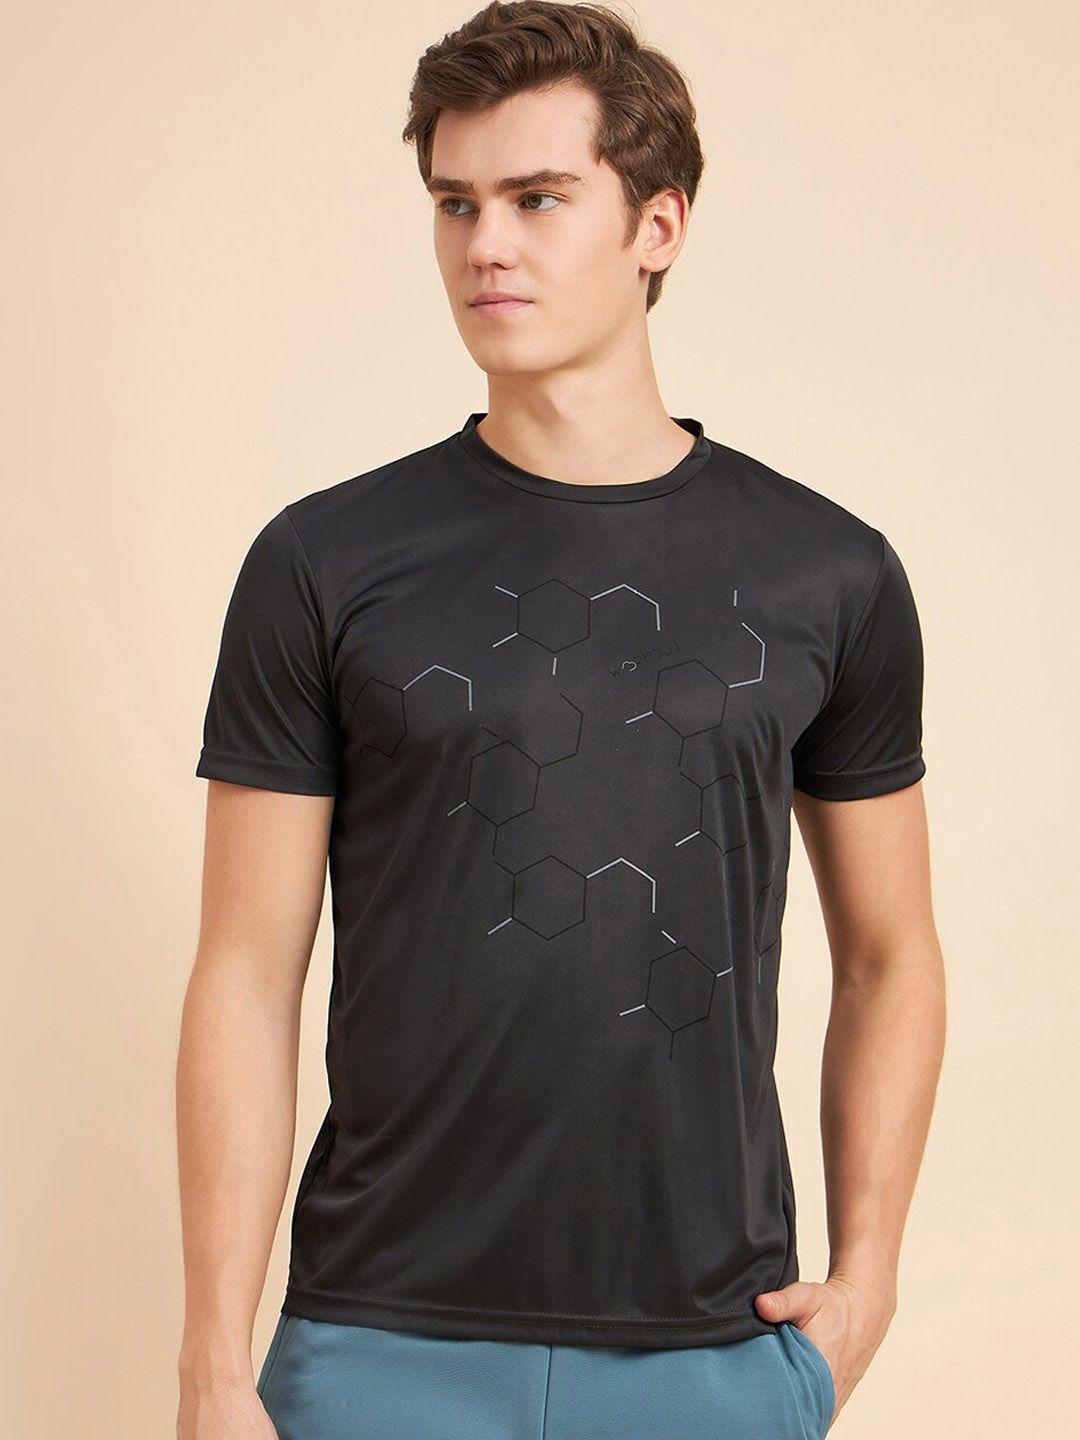 Sweet Dreams Black Dry-Fit Technology Geometric Printed Sports Tshirts